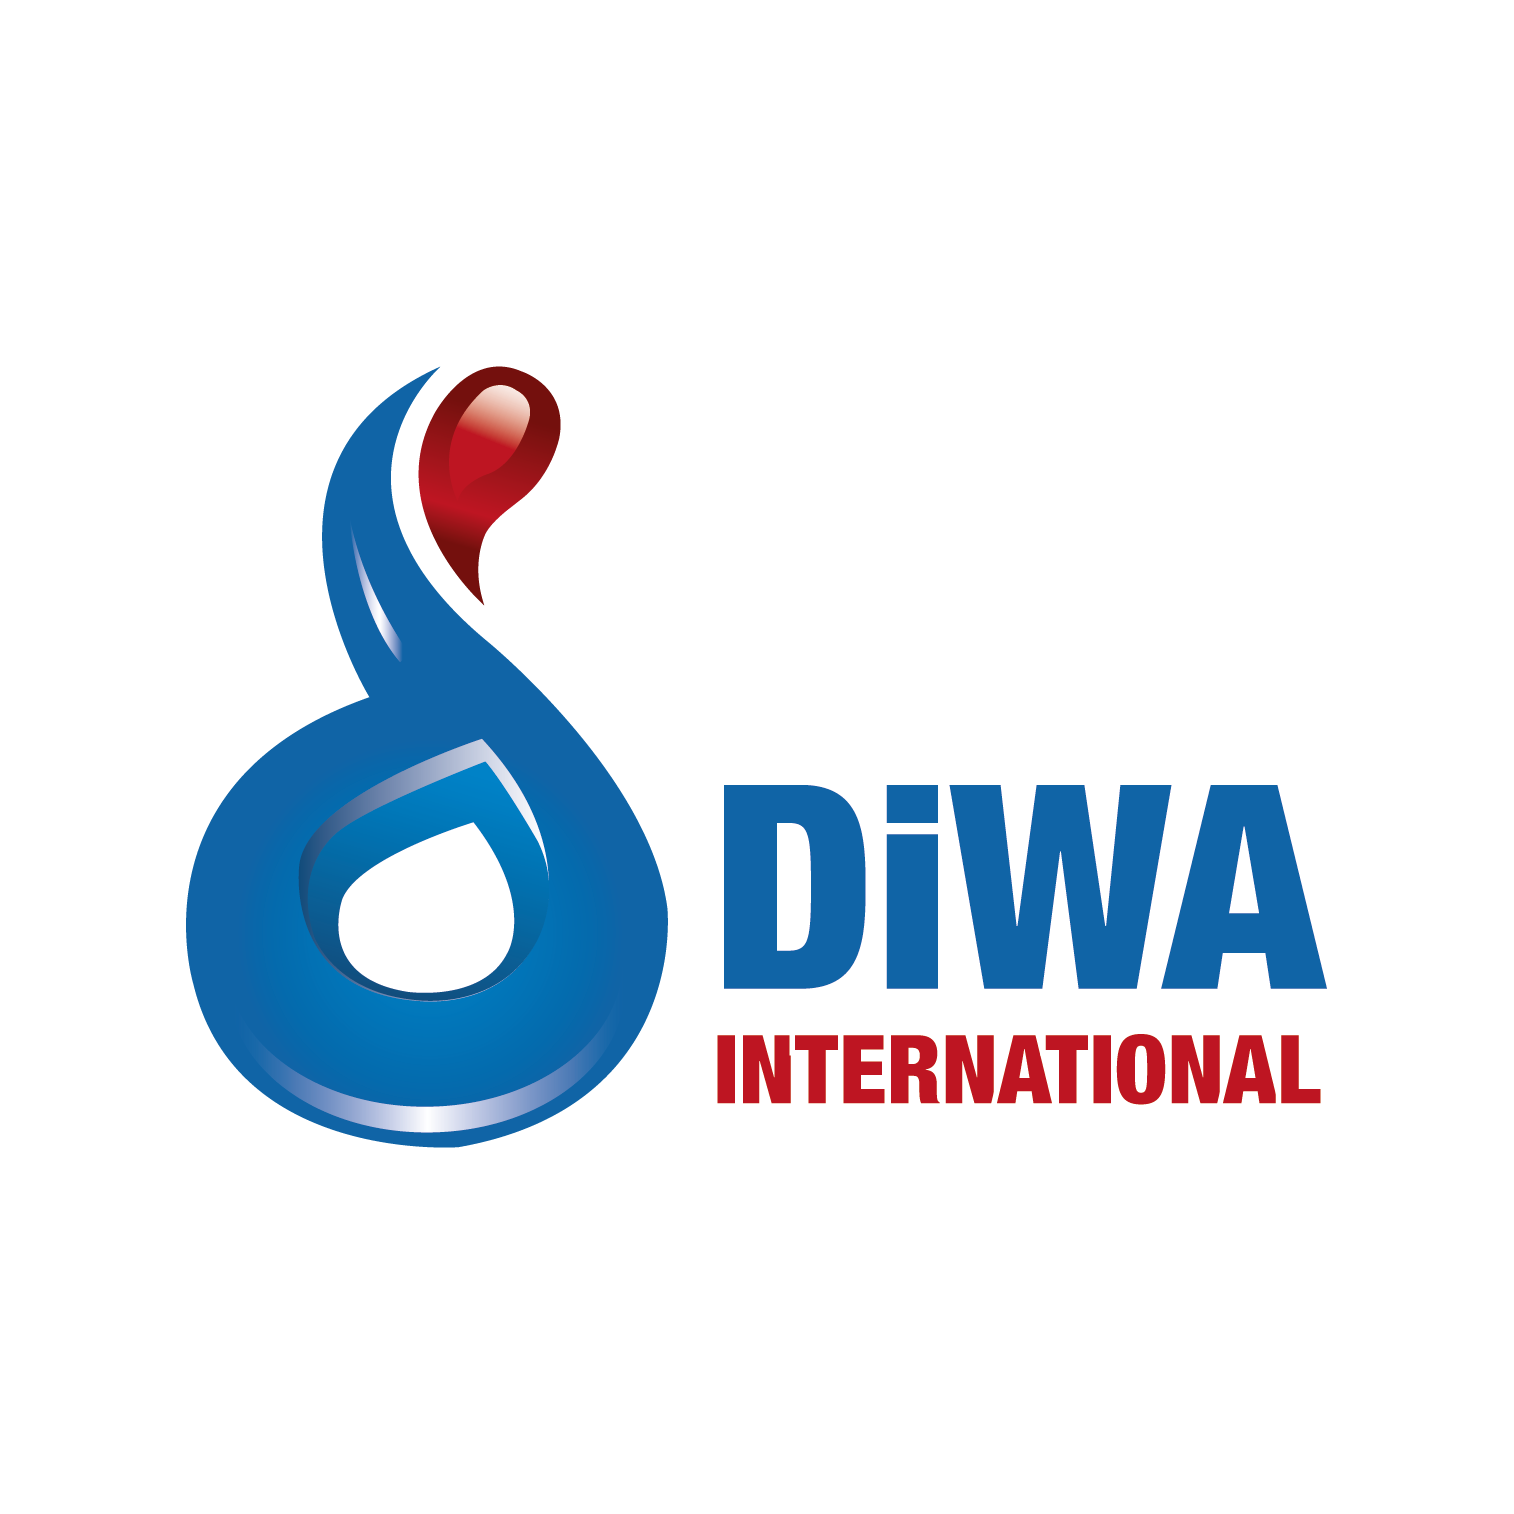 Diwa International logo